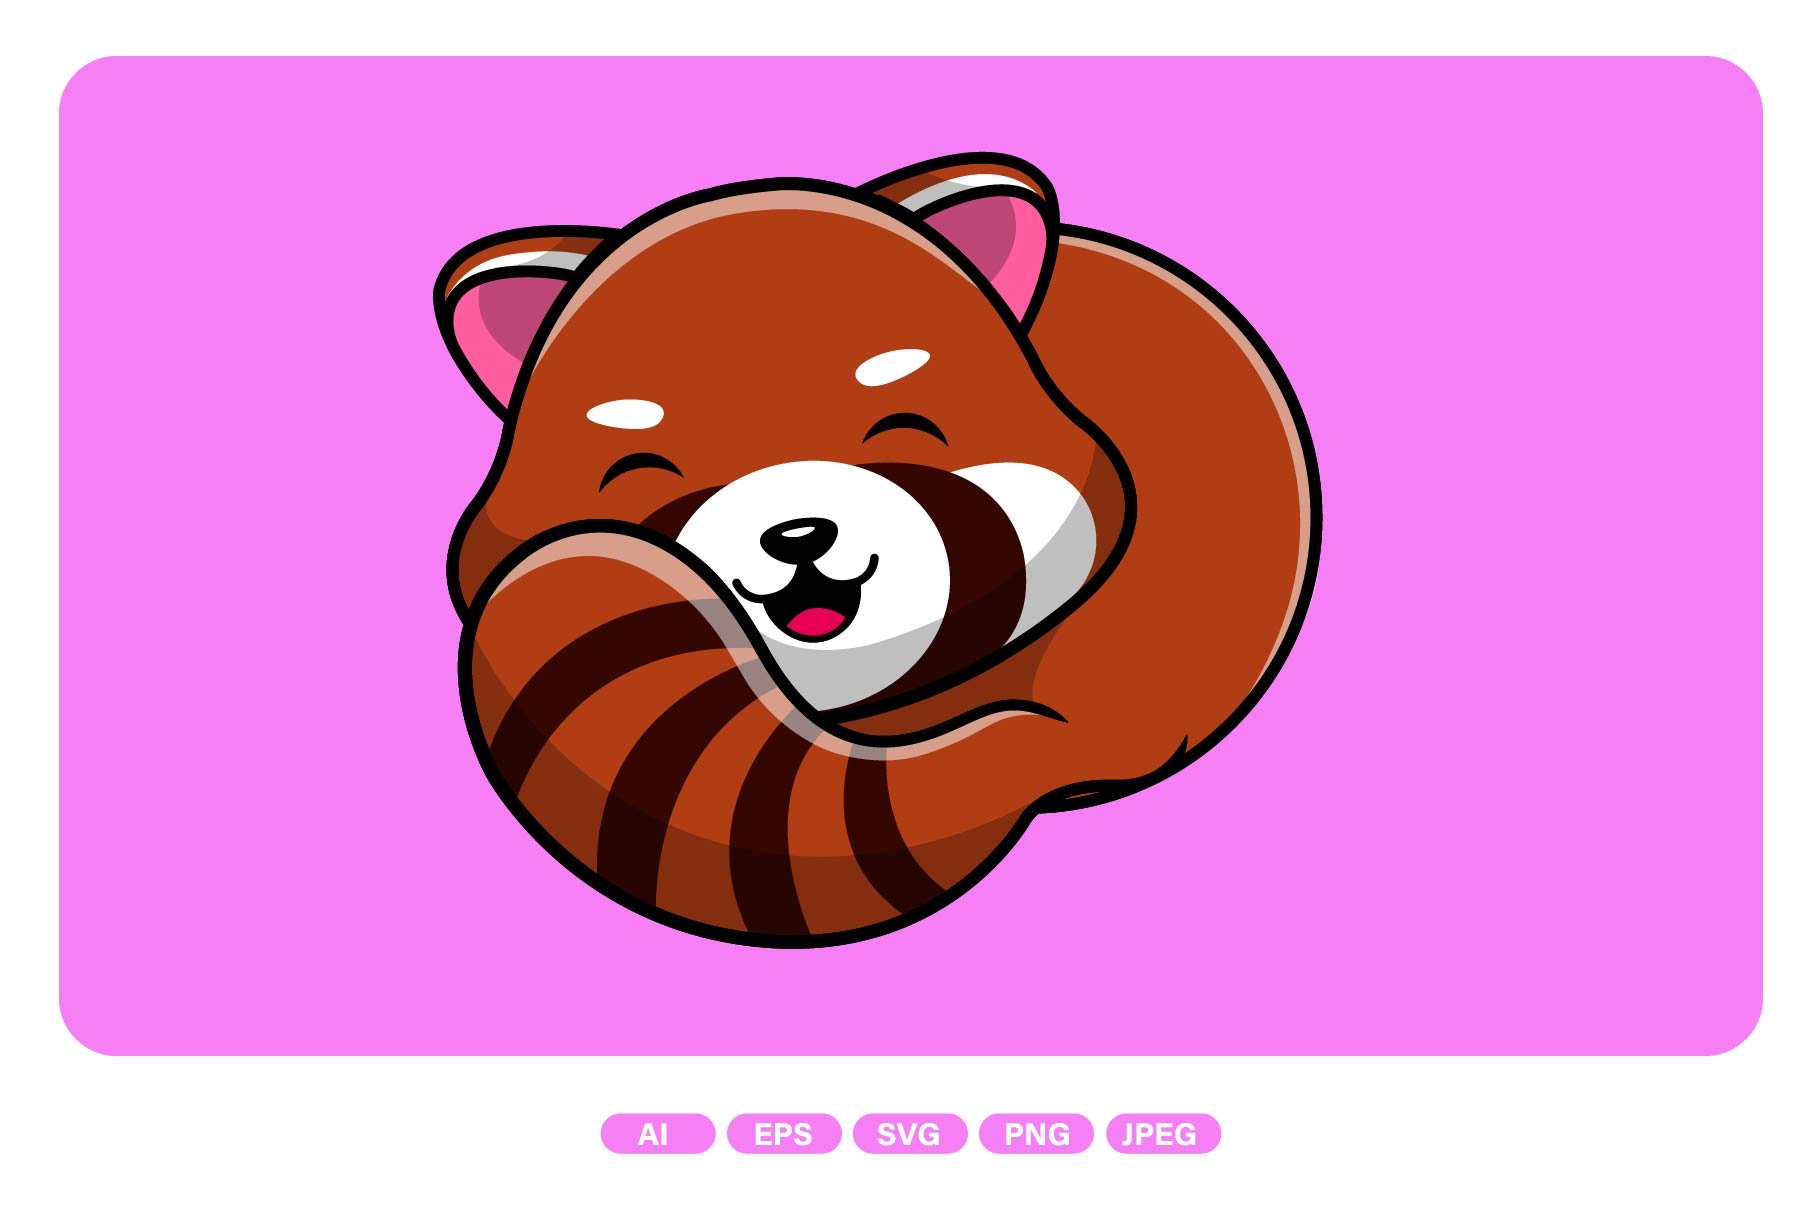 Cute Red Panda Lying cover image.